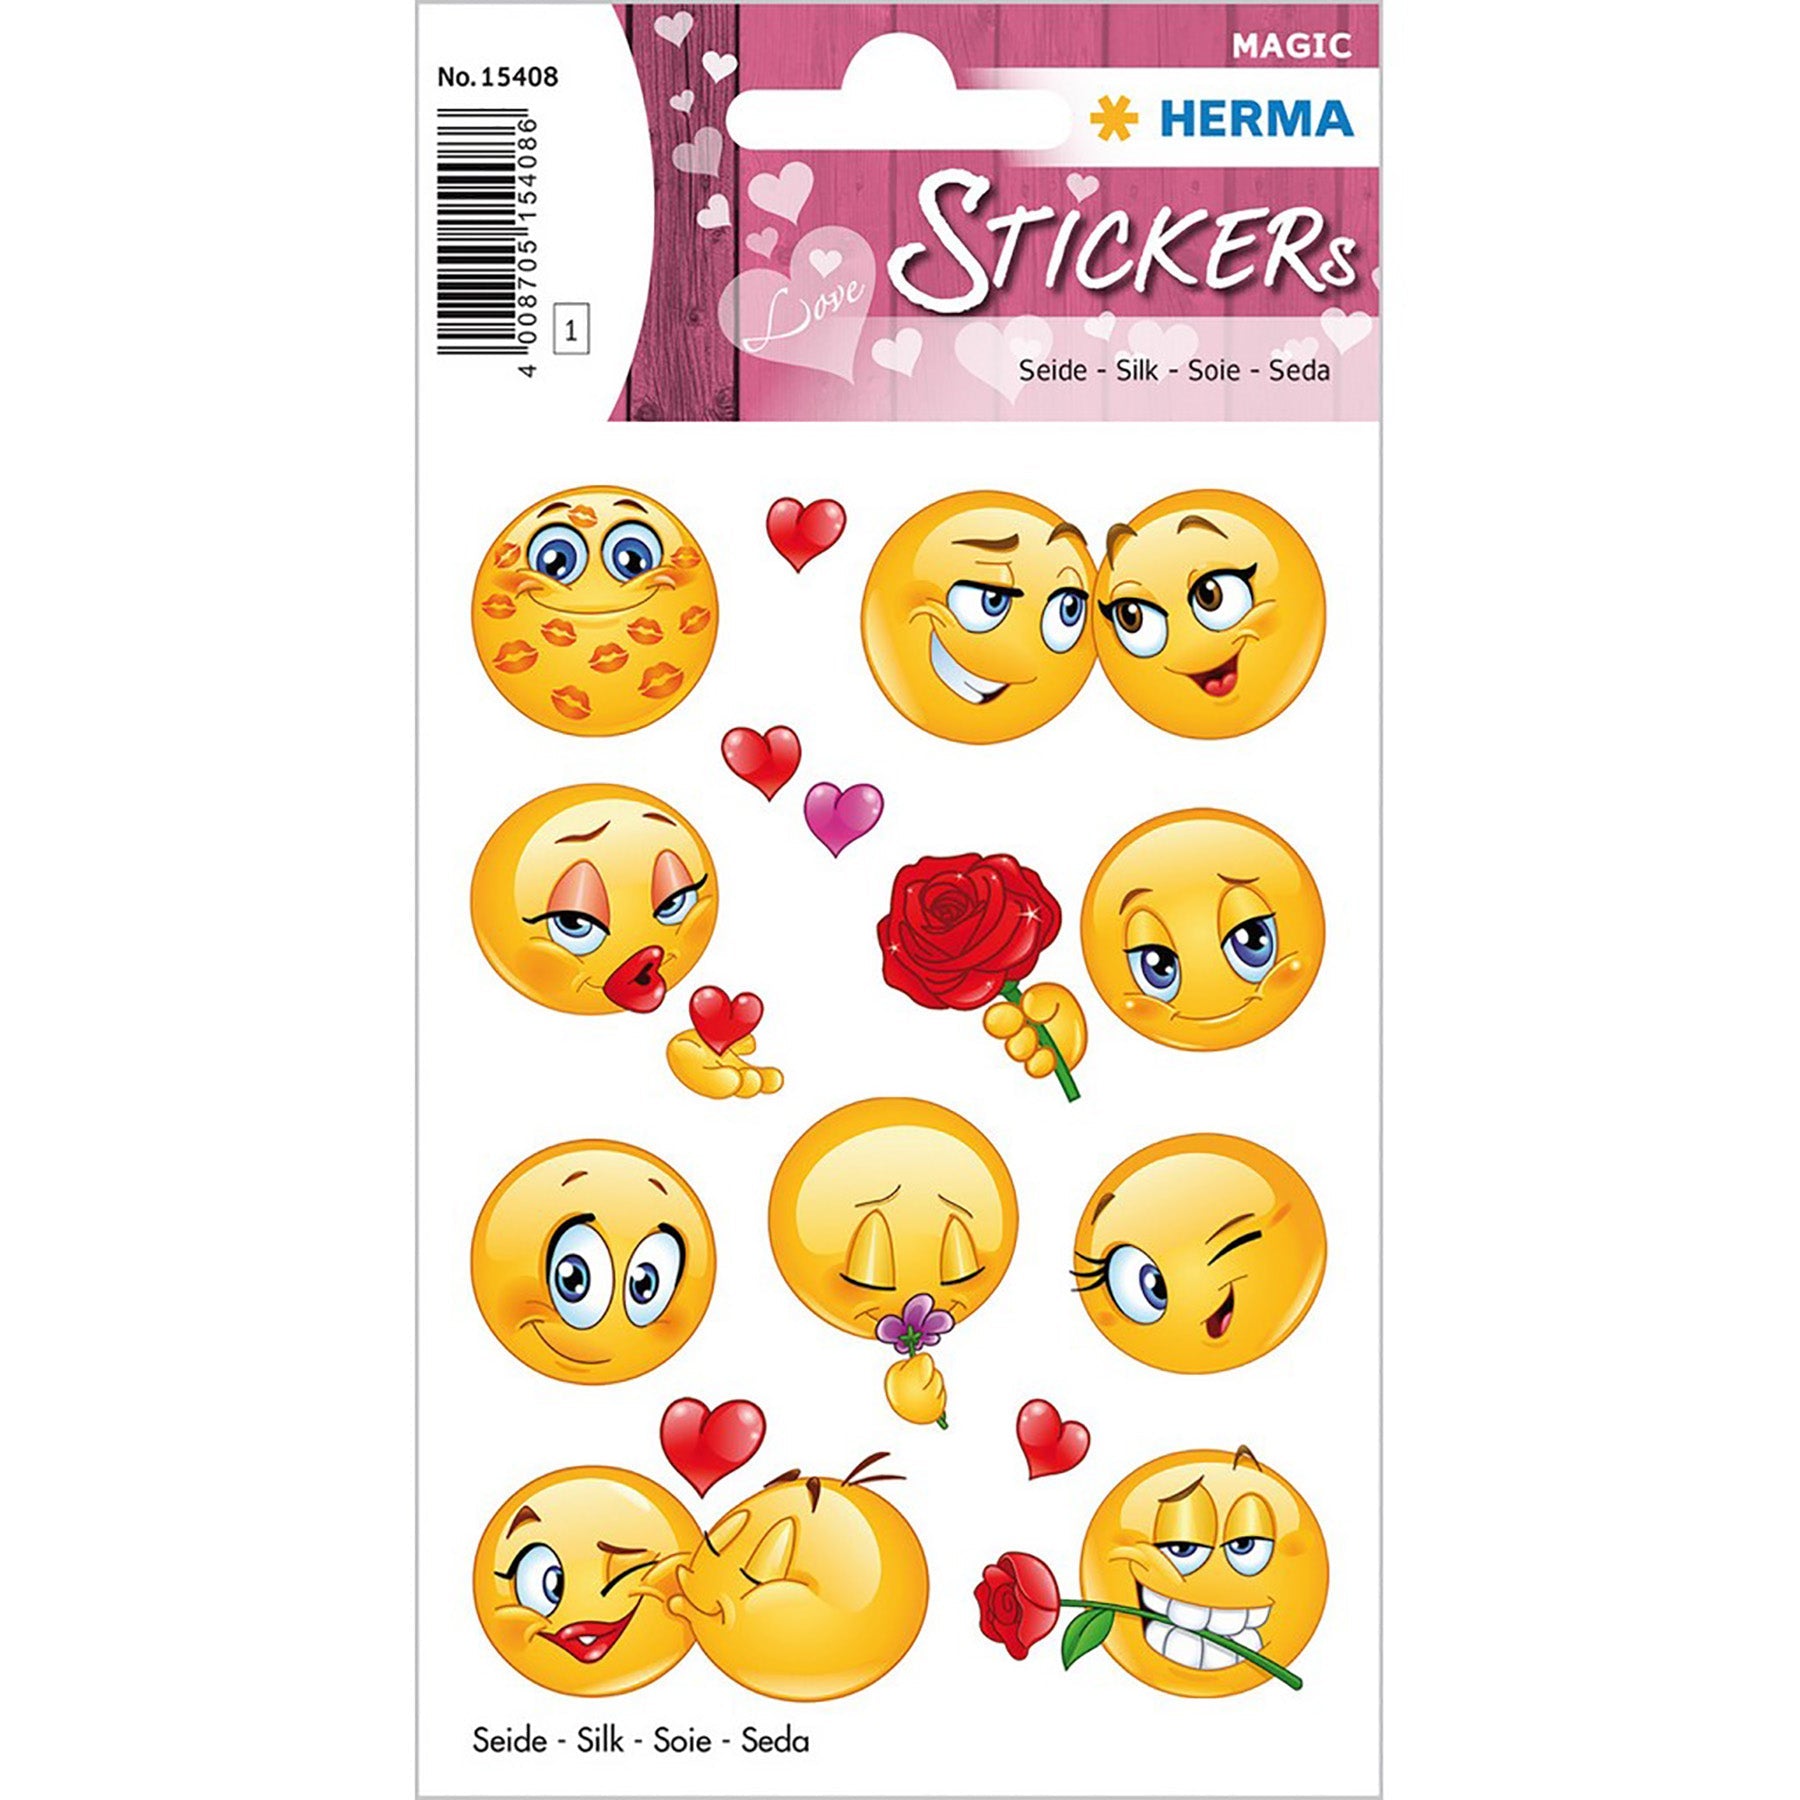 Herma Magic Stickers Love Faces Silk 4.75x3.1in Sheet